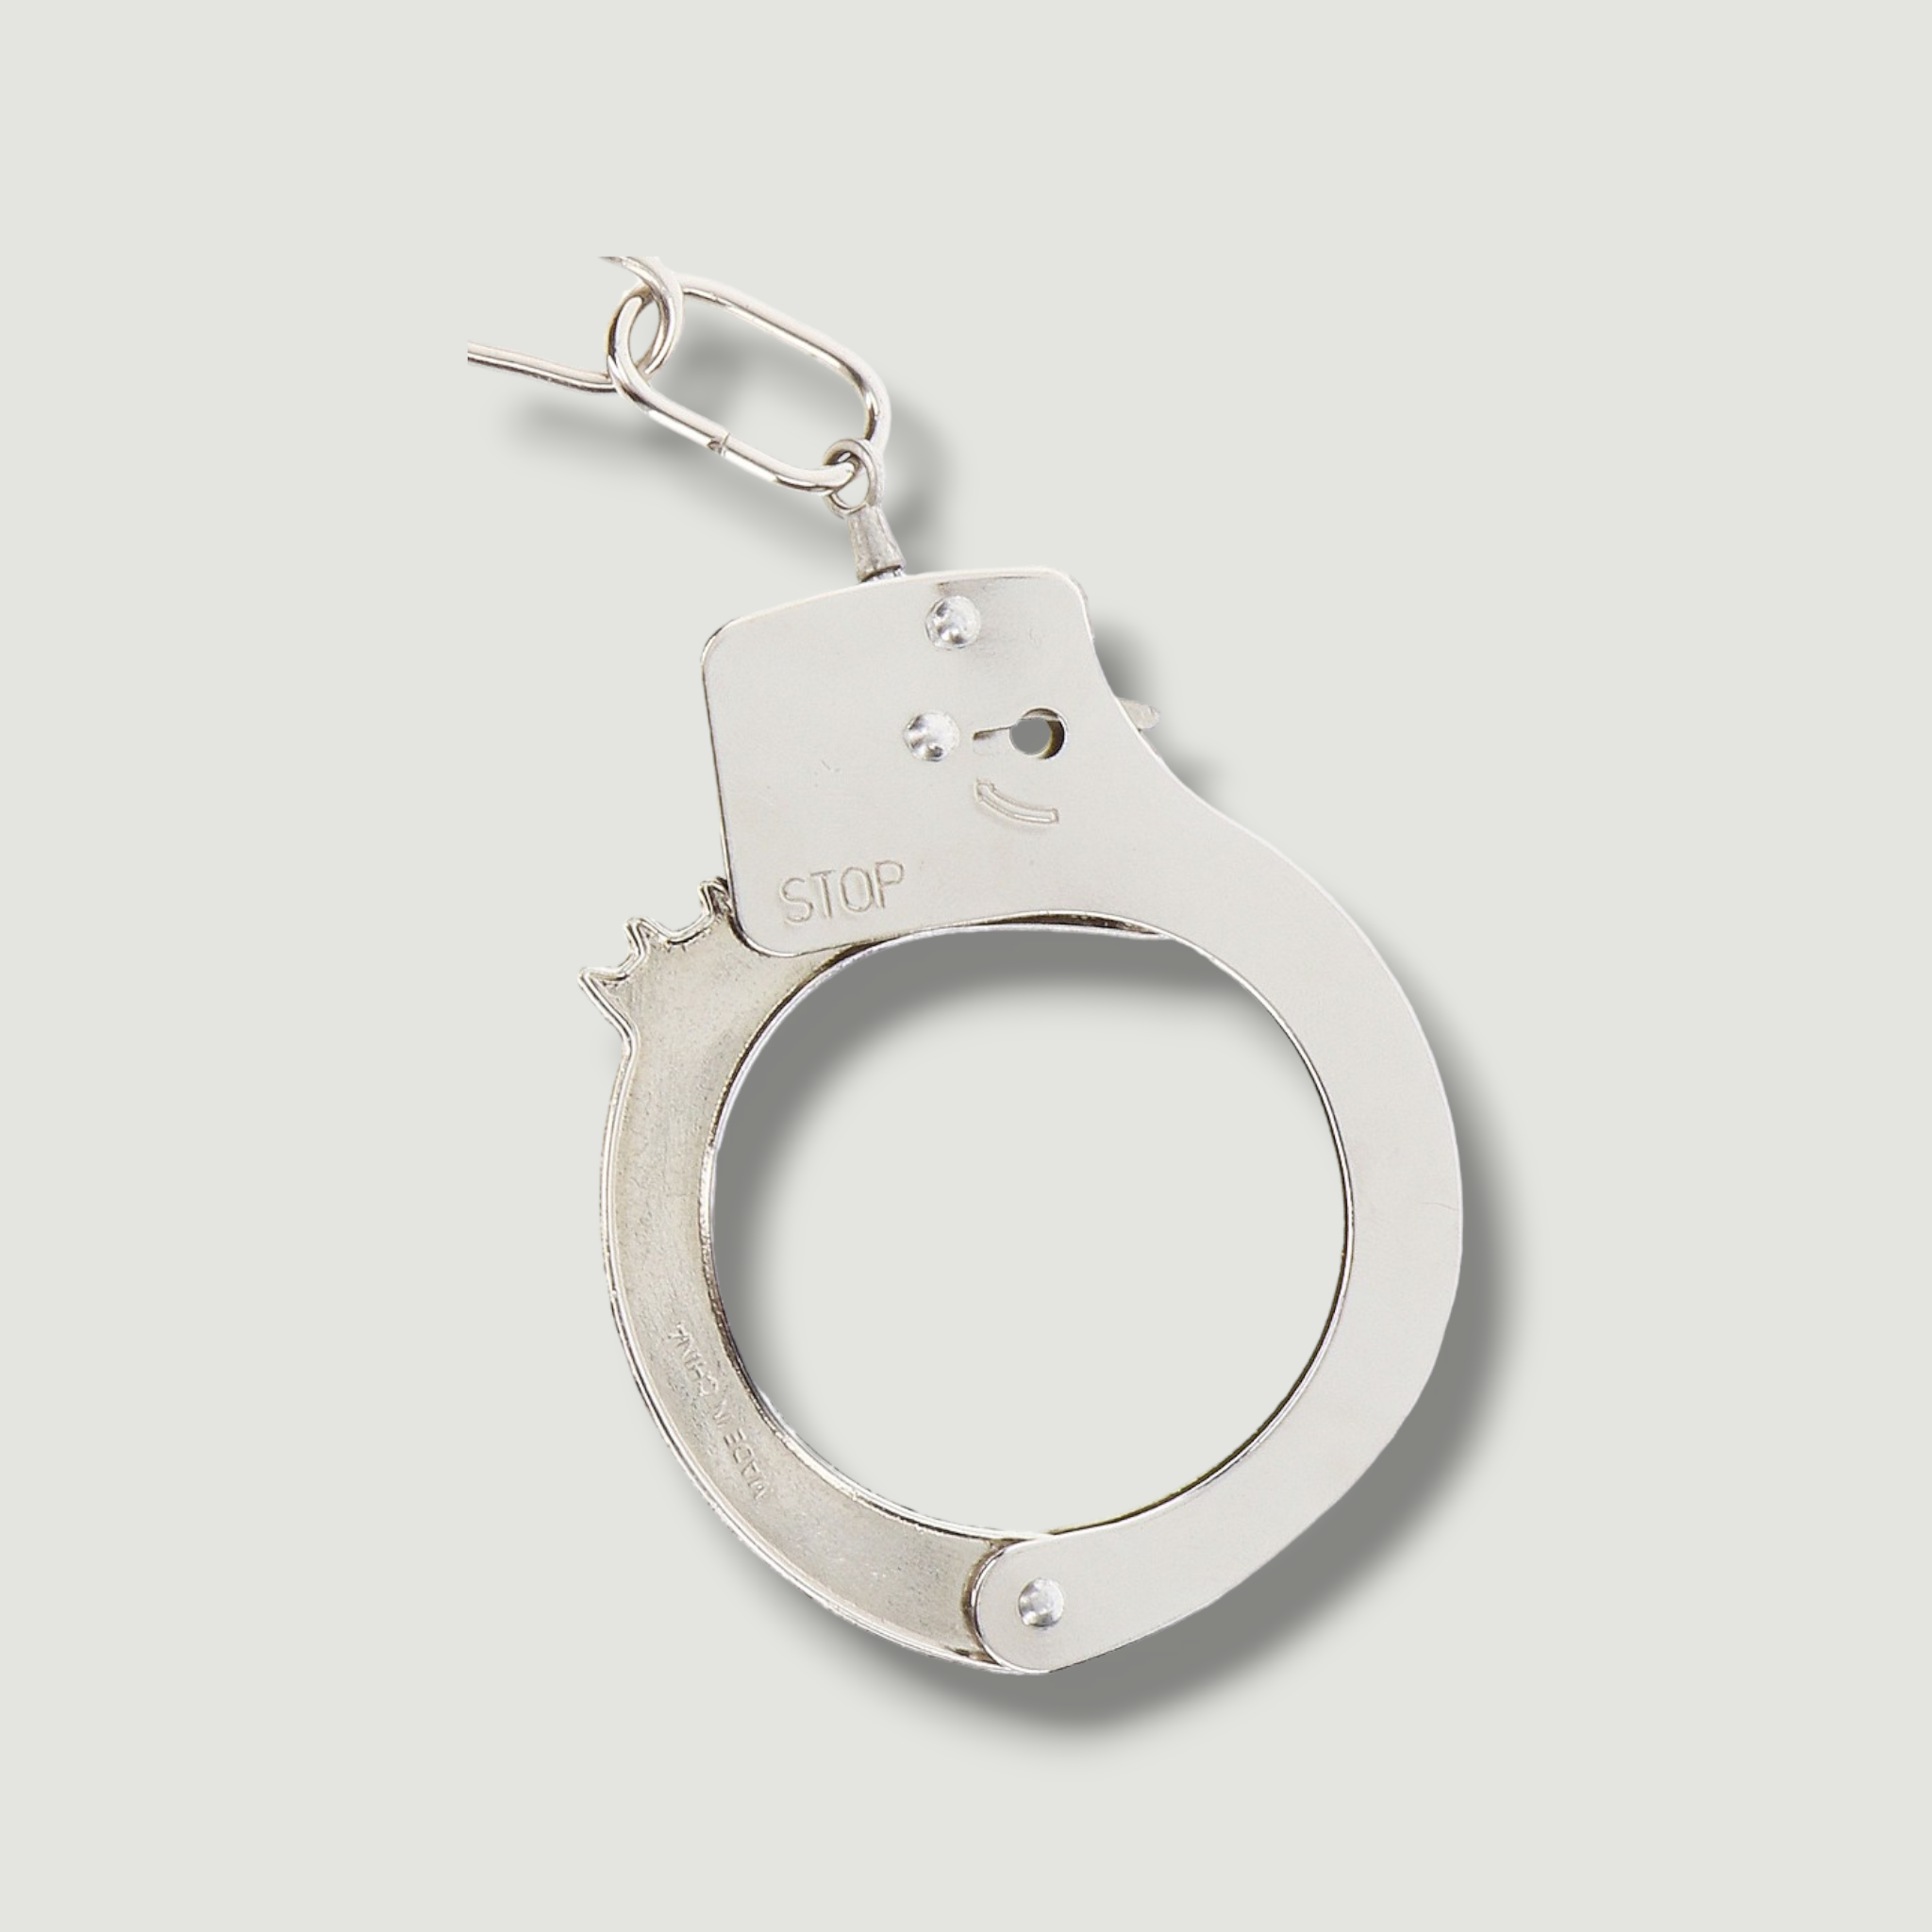 Metal Handcuffs- metal